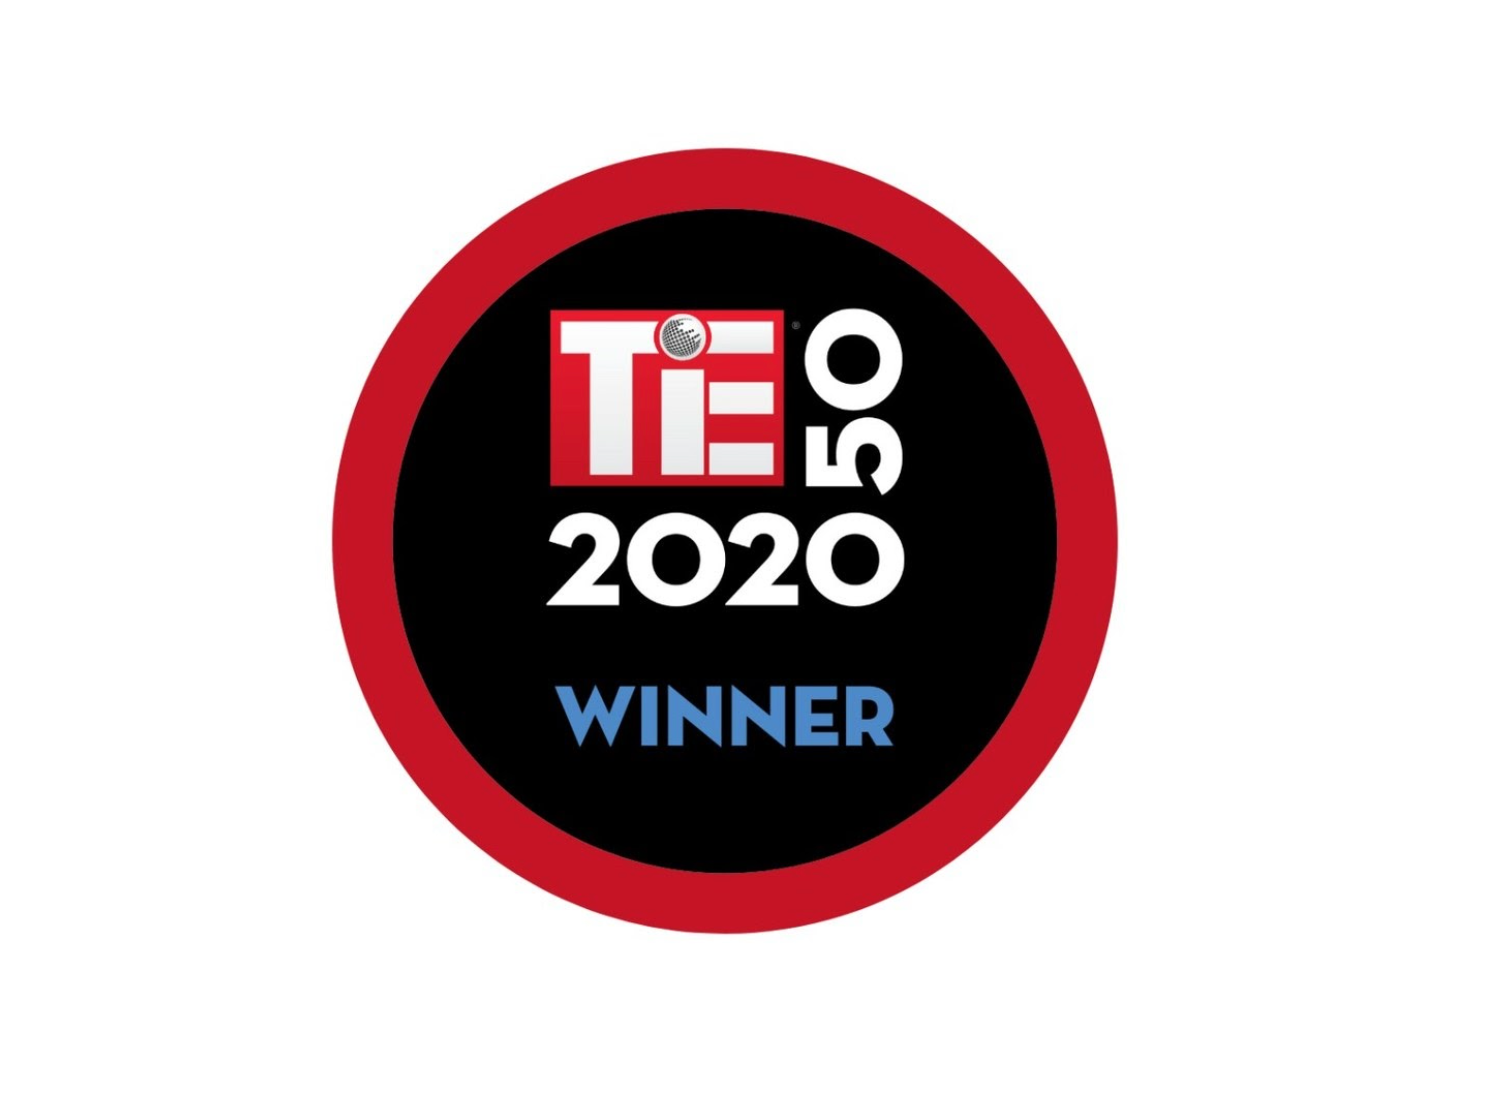 tiecon winner 2020 paperflite